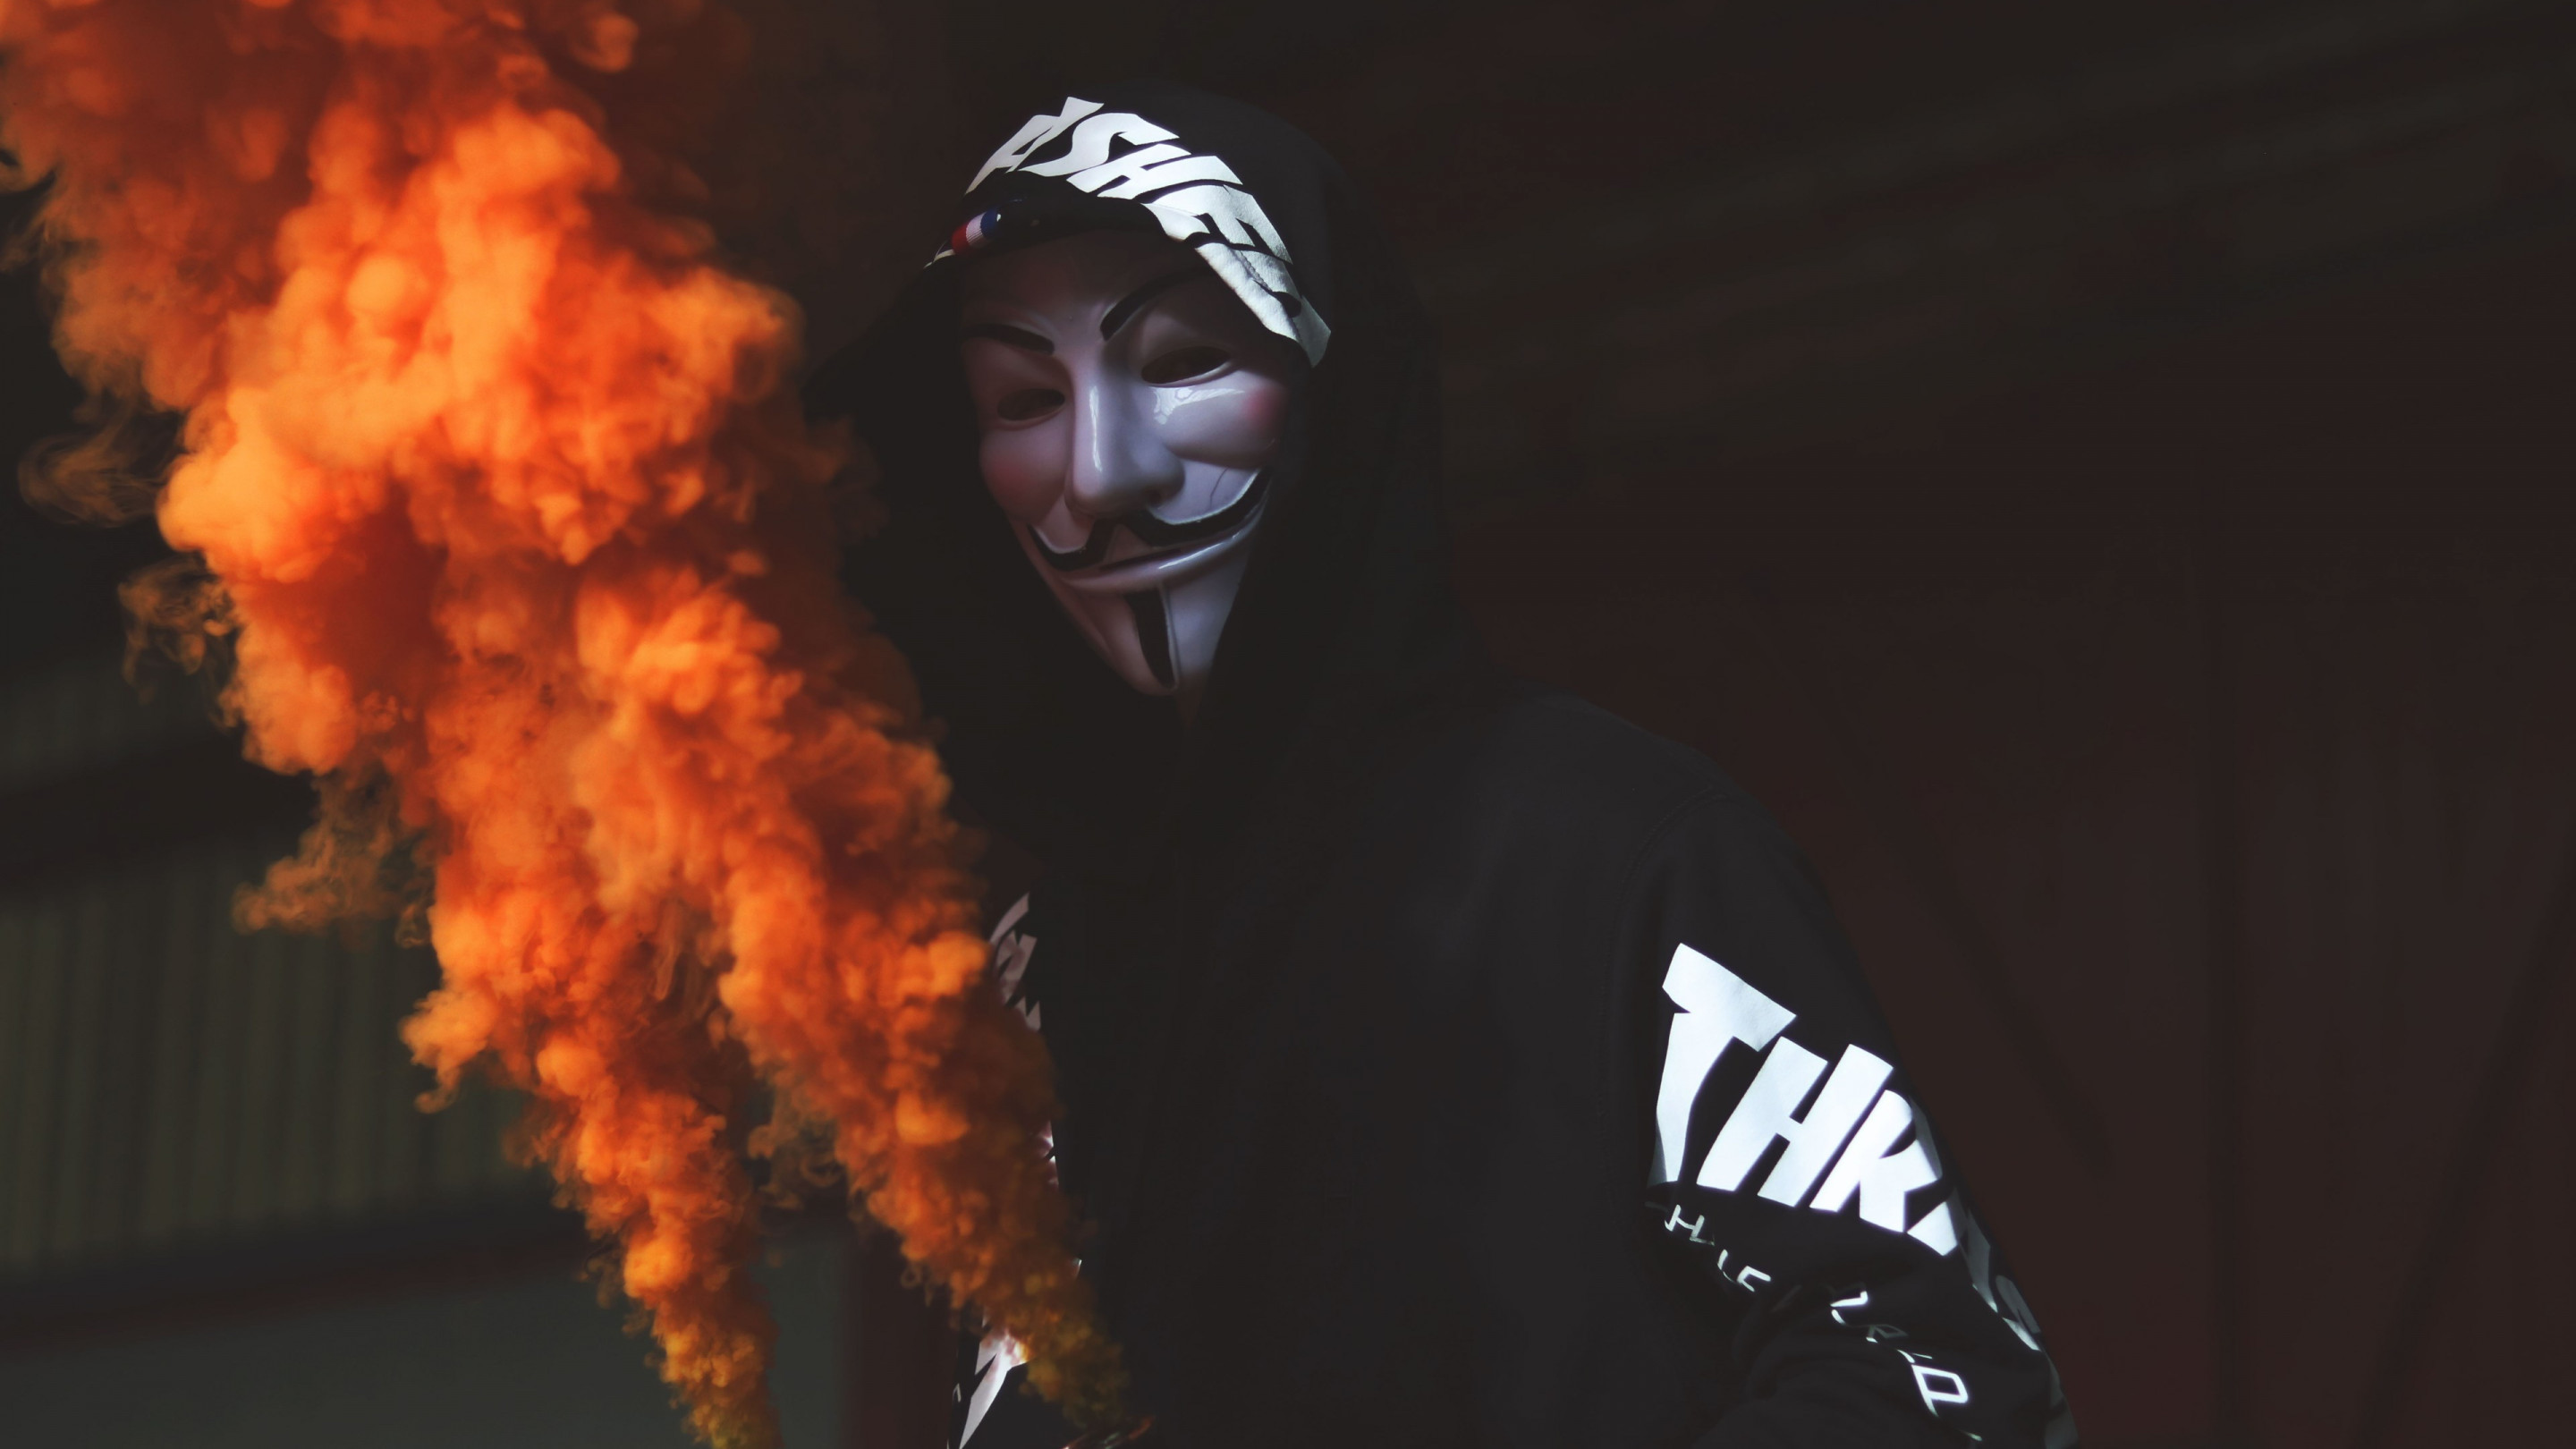 Anonymous mask and orange smoke wallpaper 2880x1620